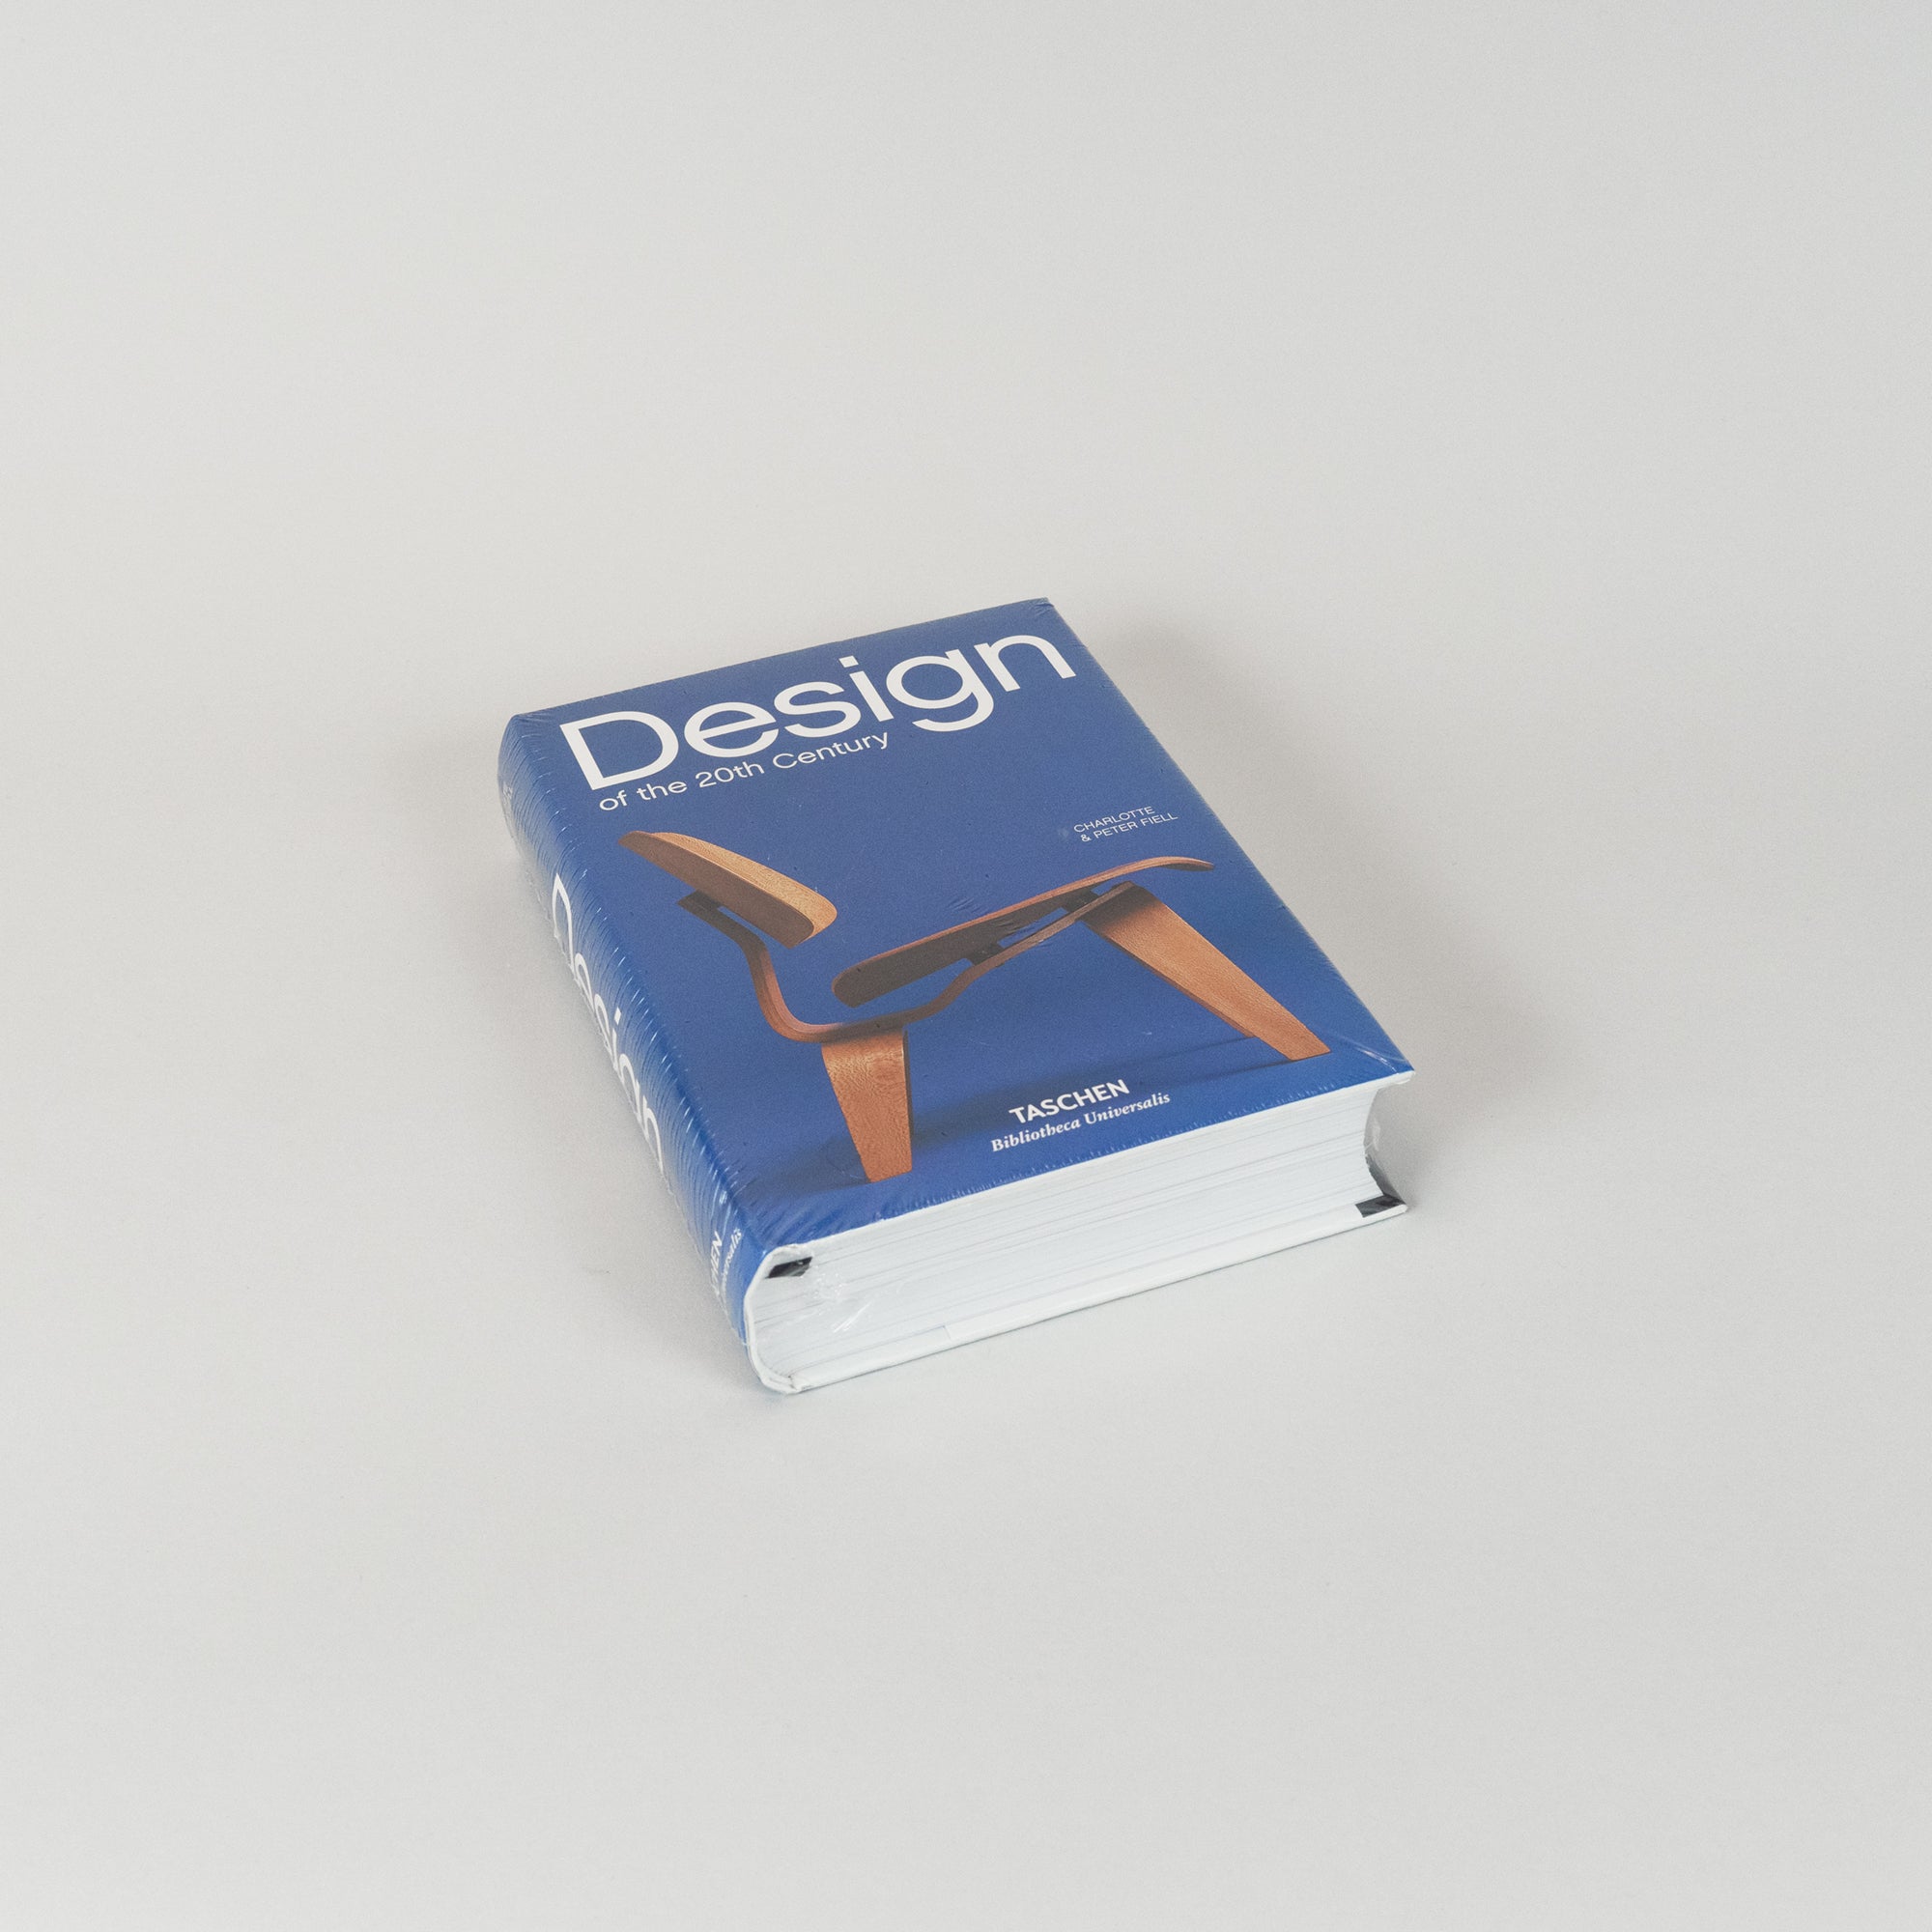 Design of the 20th Century Book